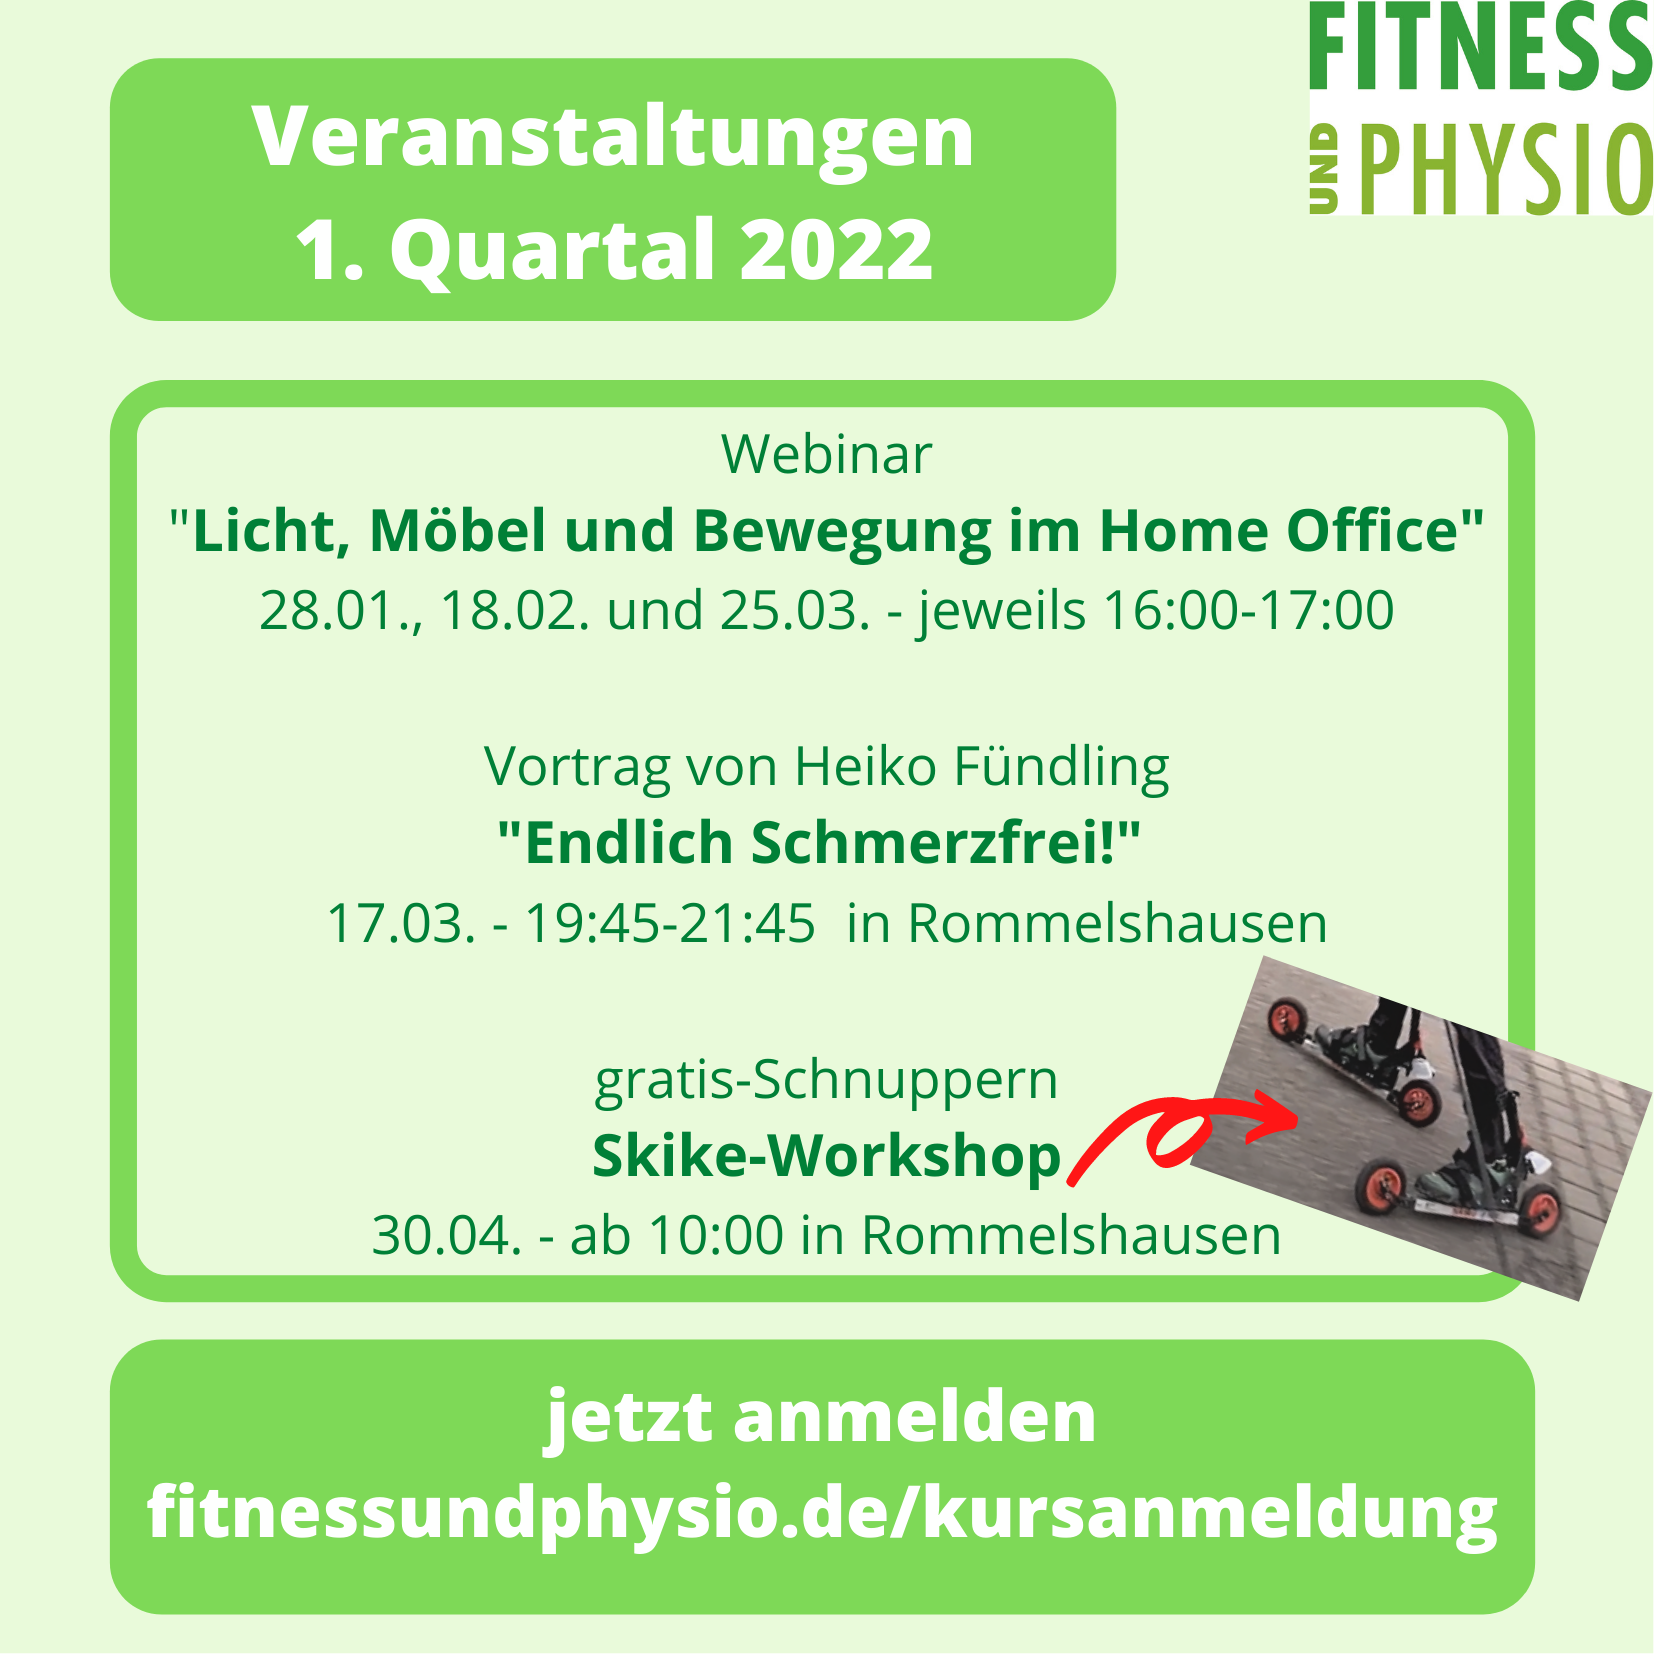 Veranstaltungsüberblick Jan-April 2022